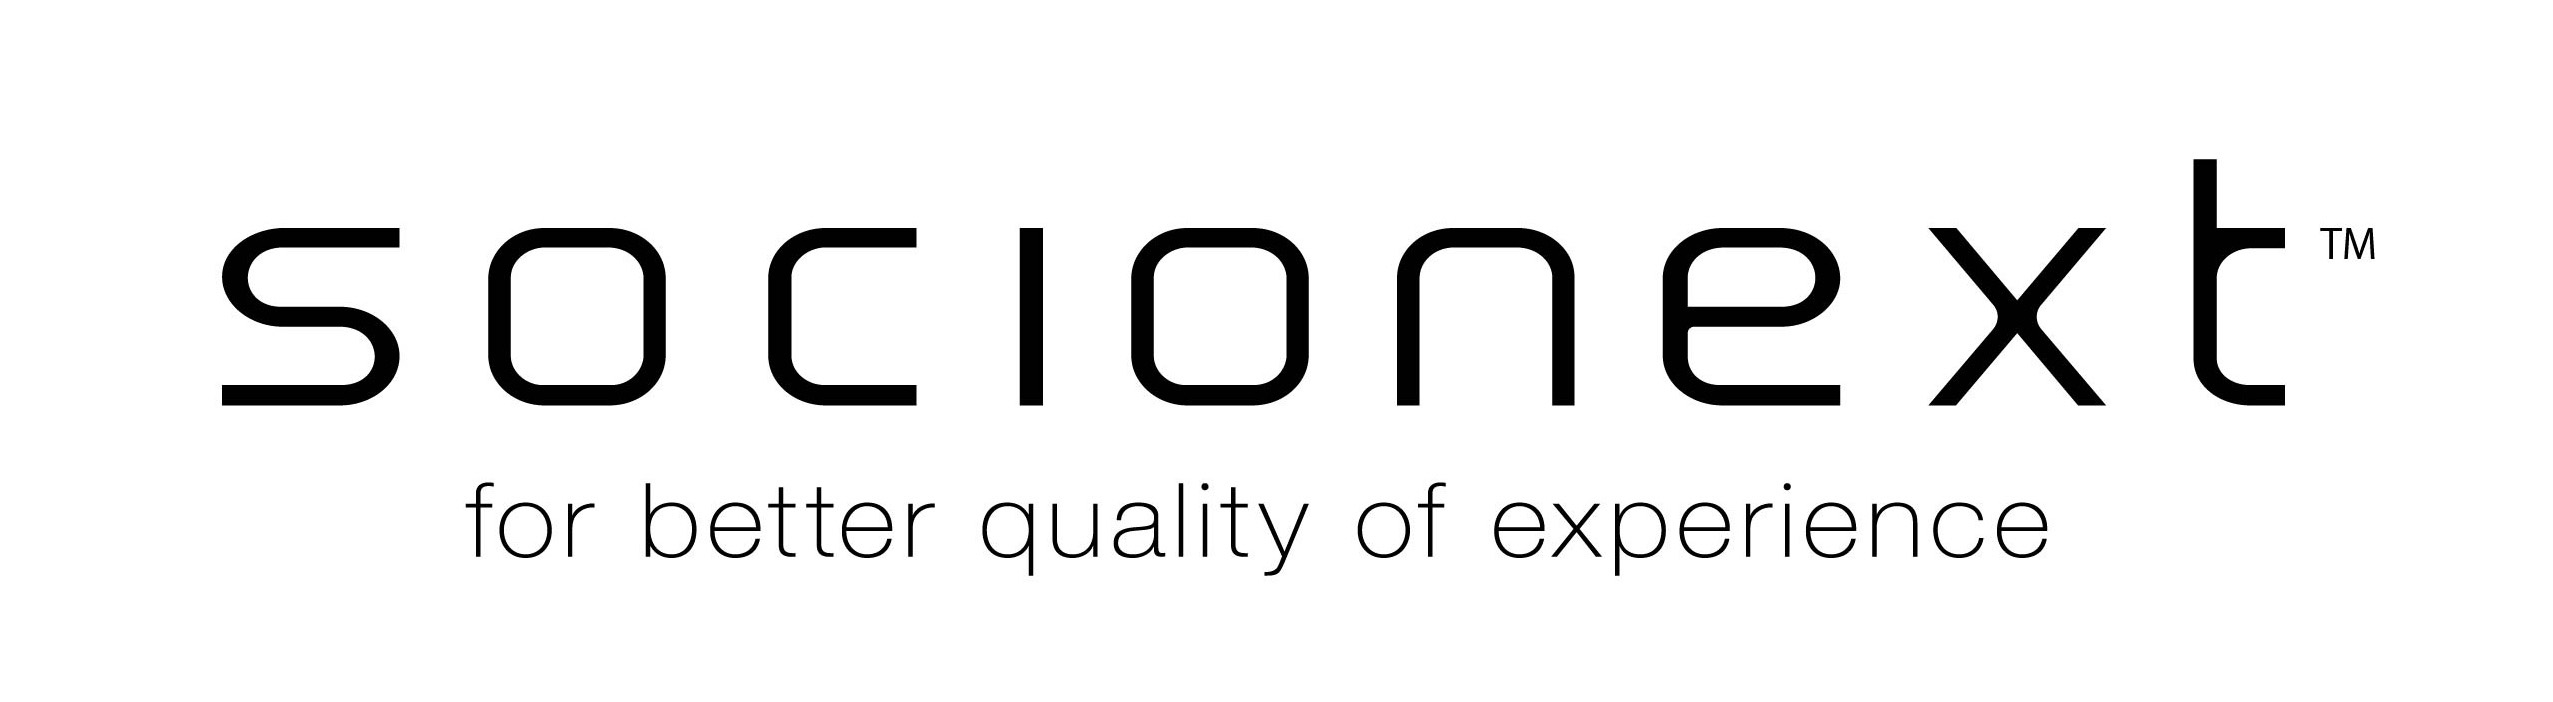 socionext_logo